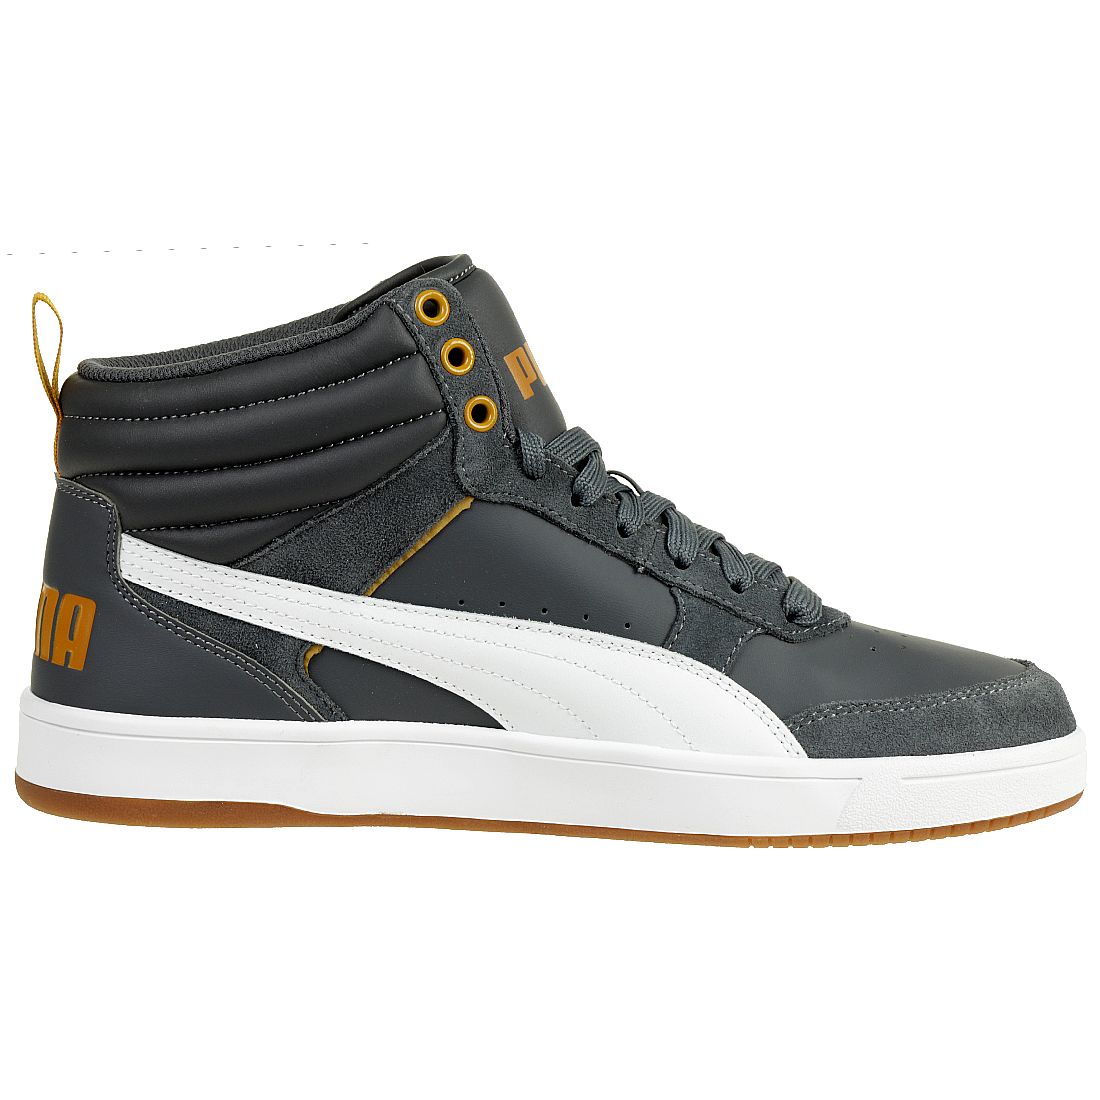 Puma Rebound Street V2 Sneaker Herren Schuhe grau 363715 08